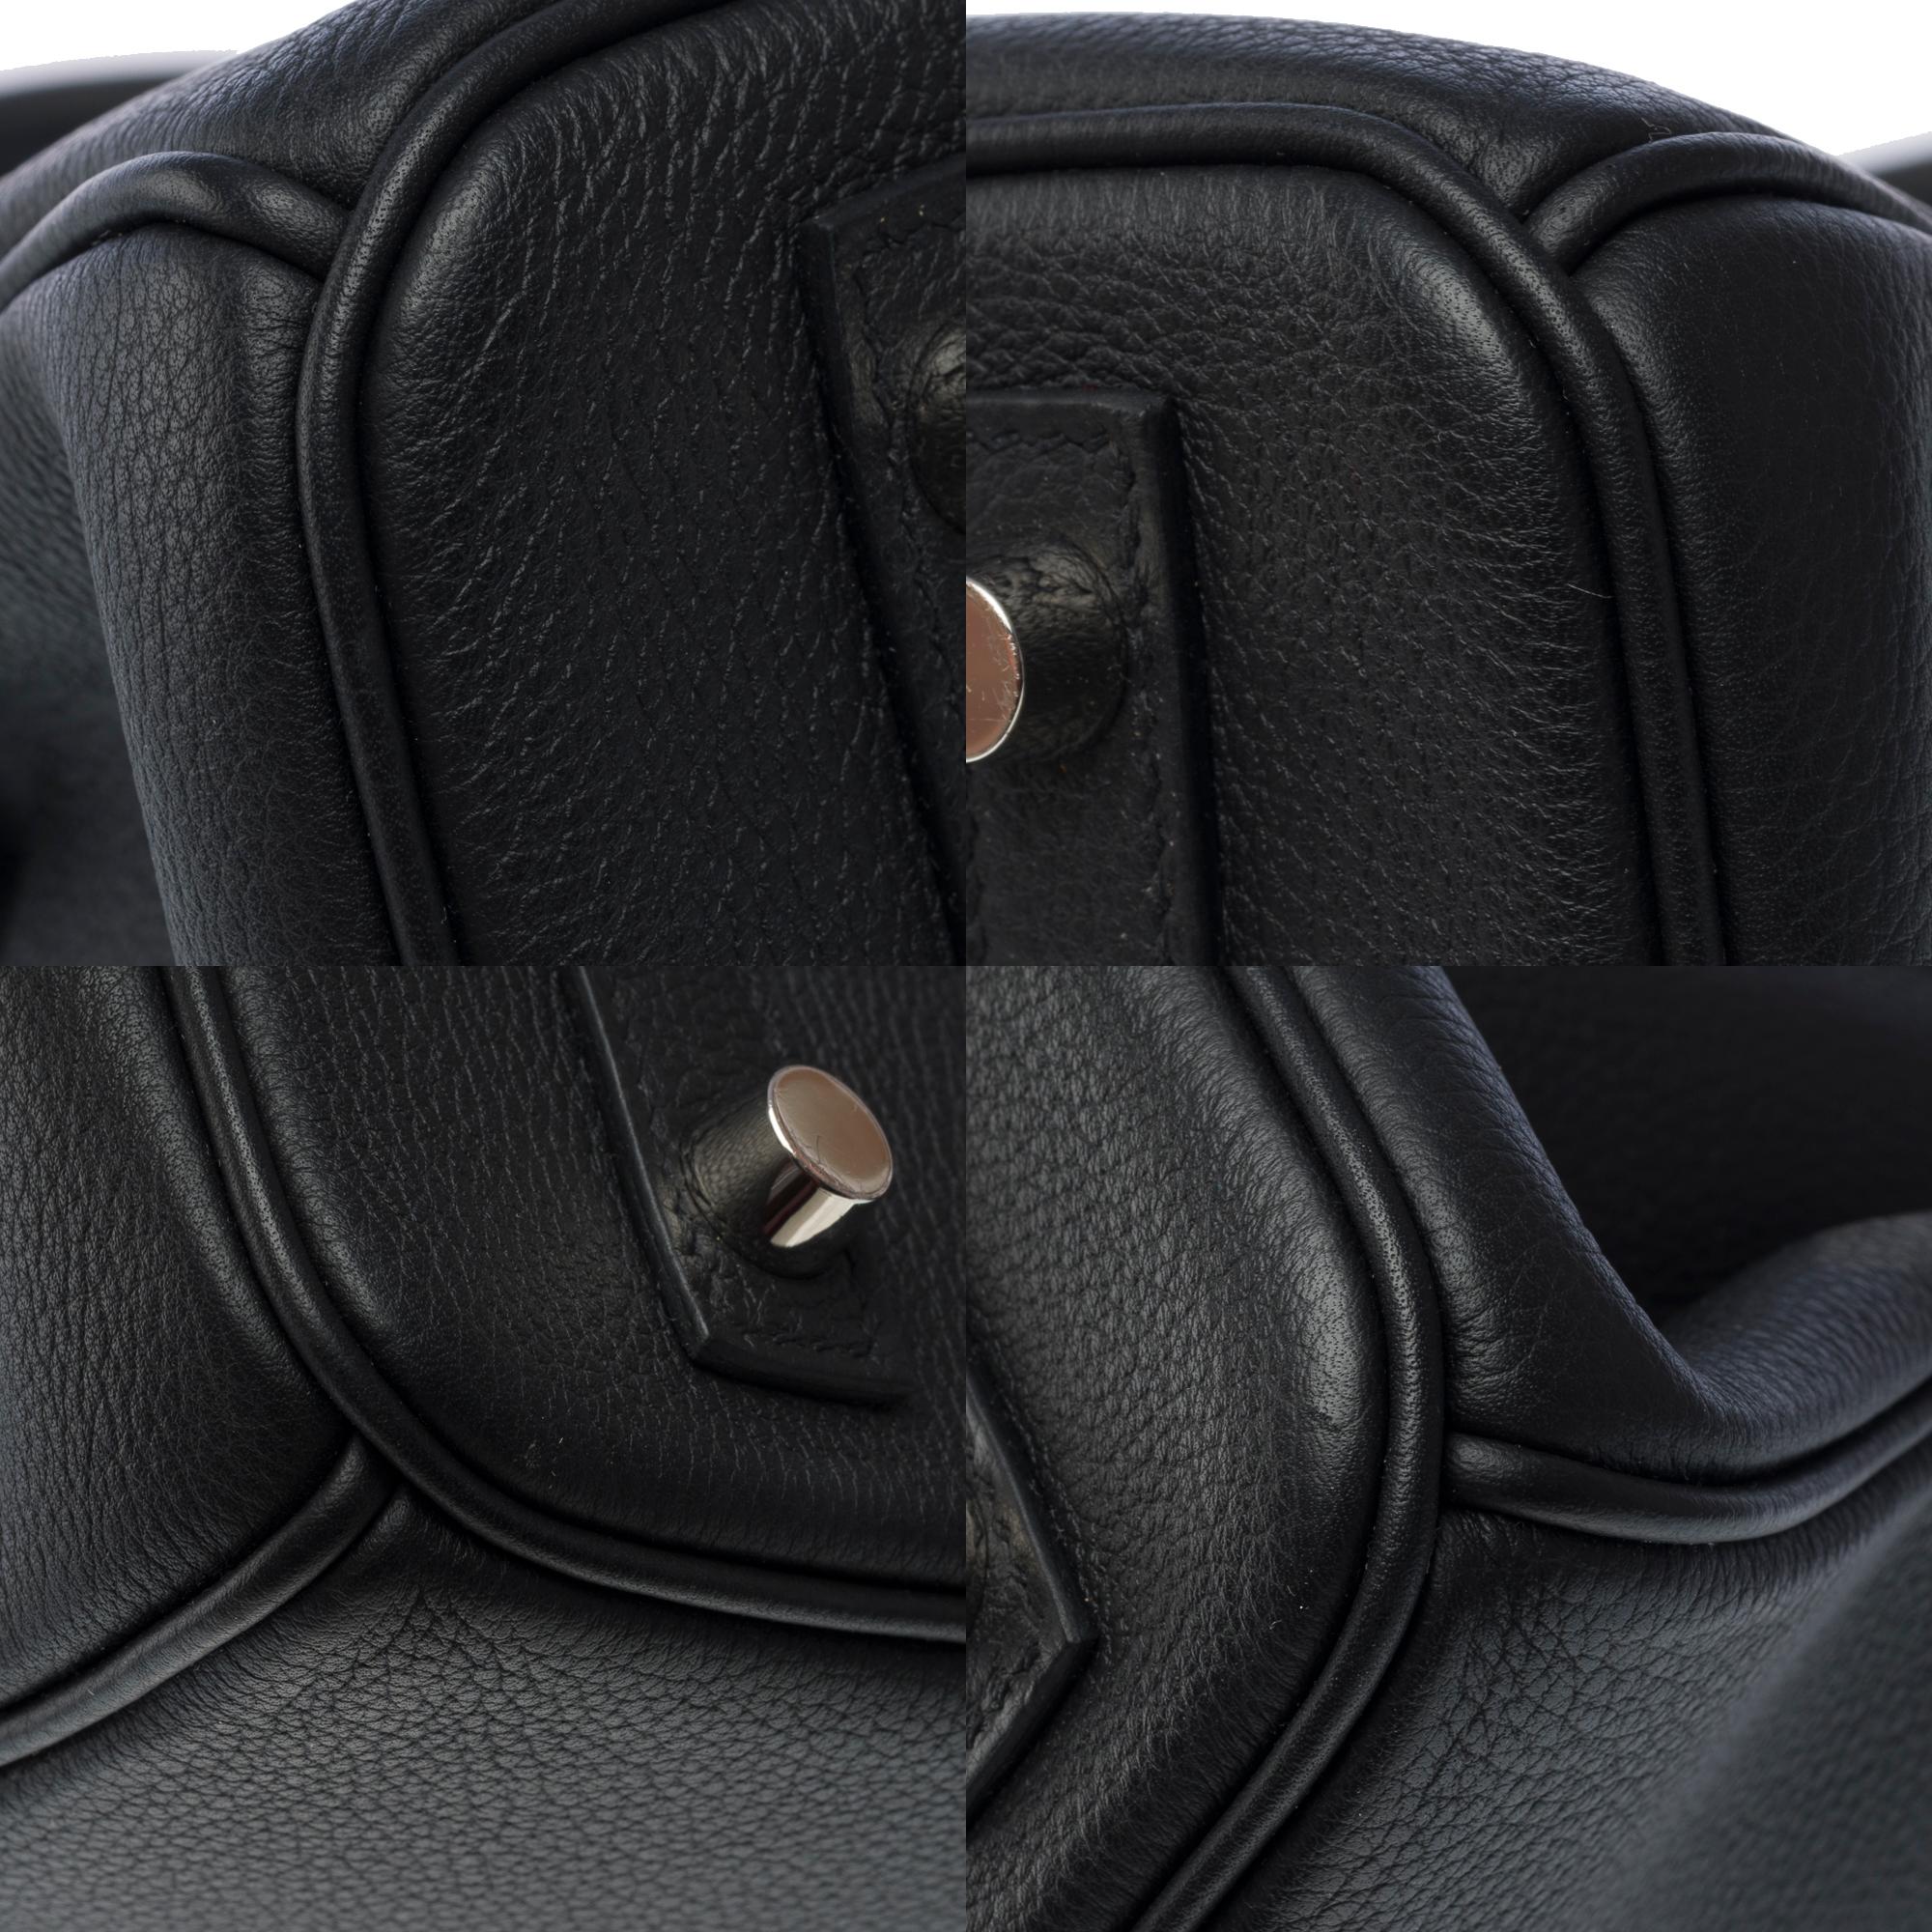 Splendid Hermes Birkin 30 handbag in Black Togo leather, SHW For Sale 7